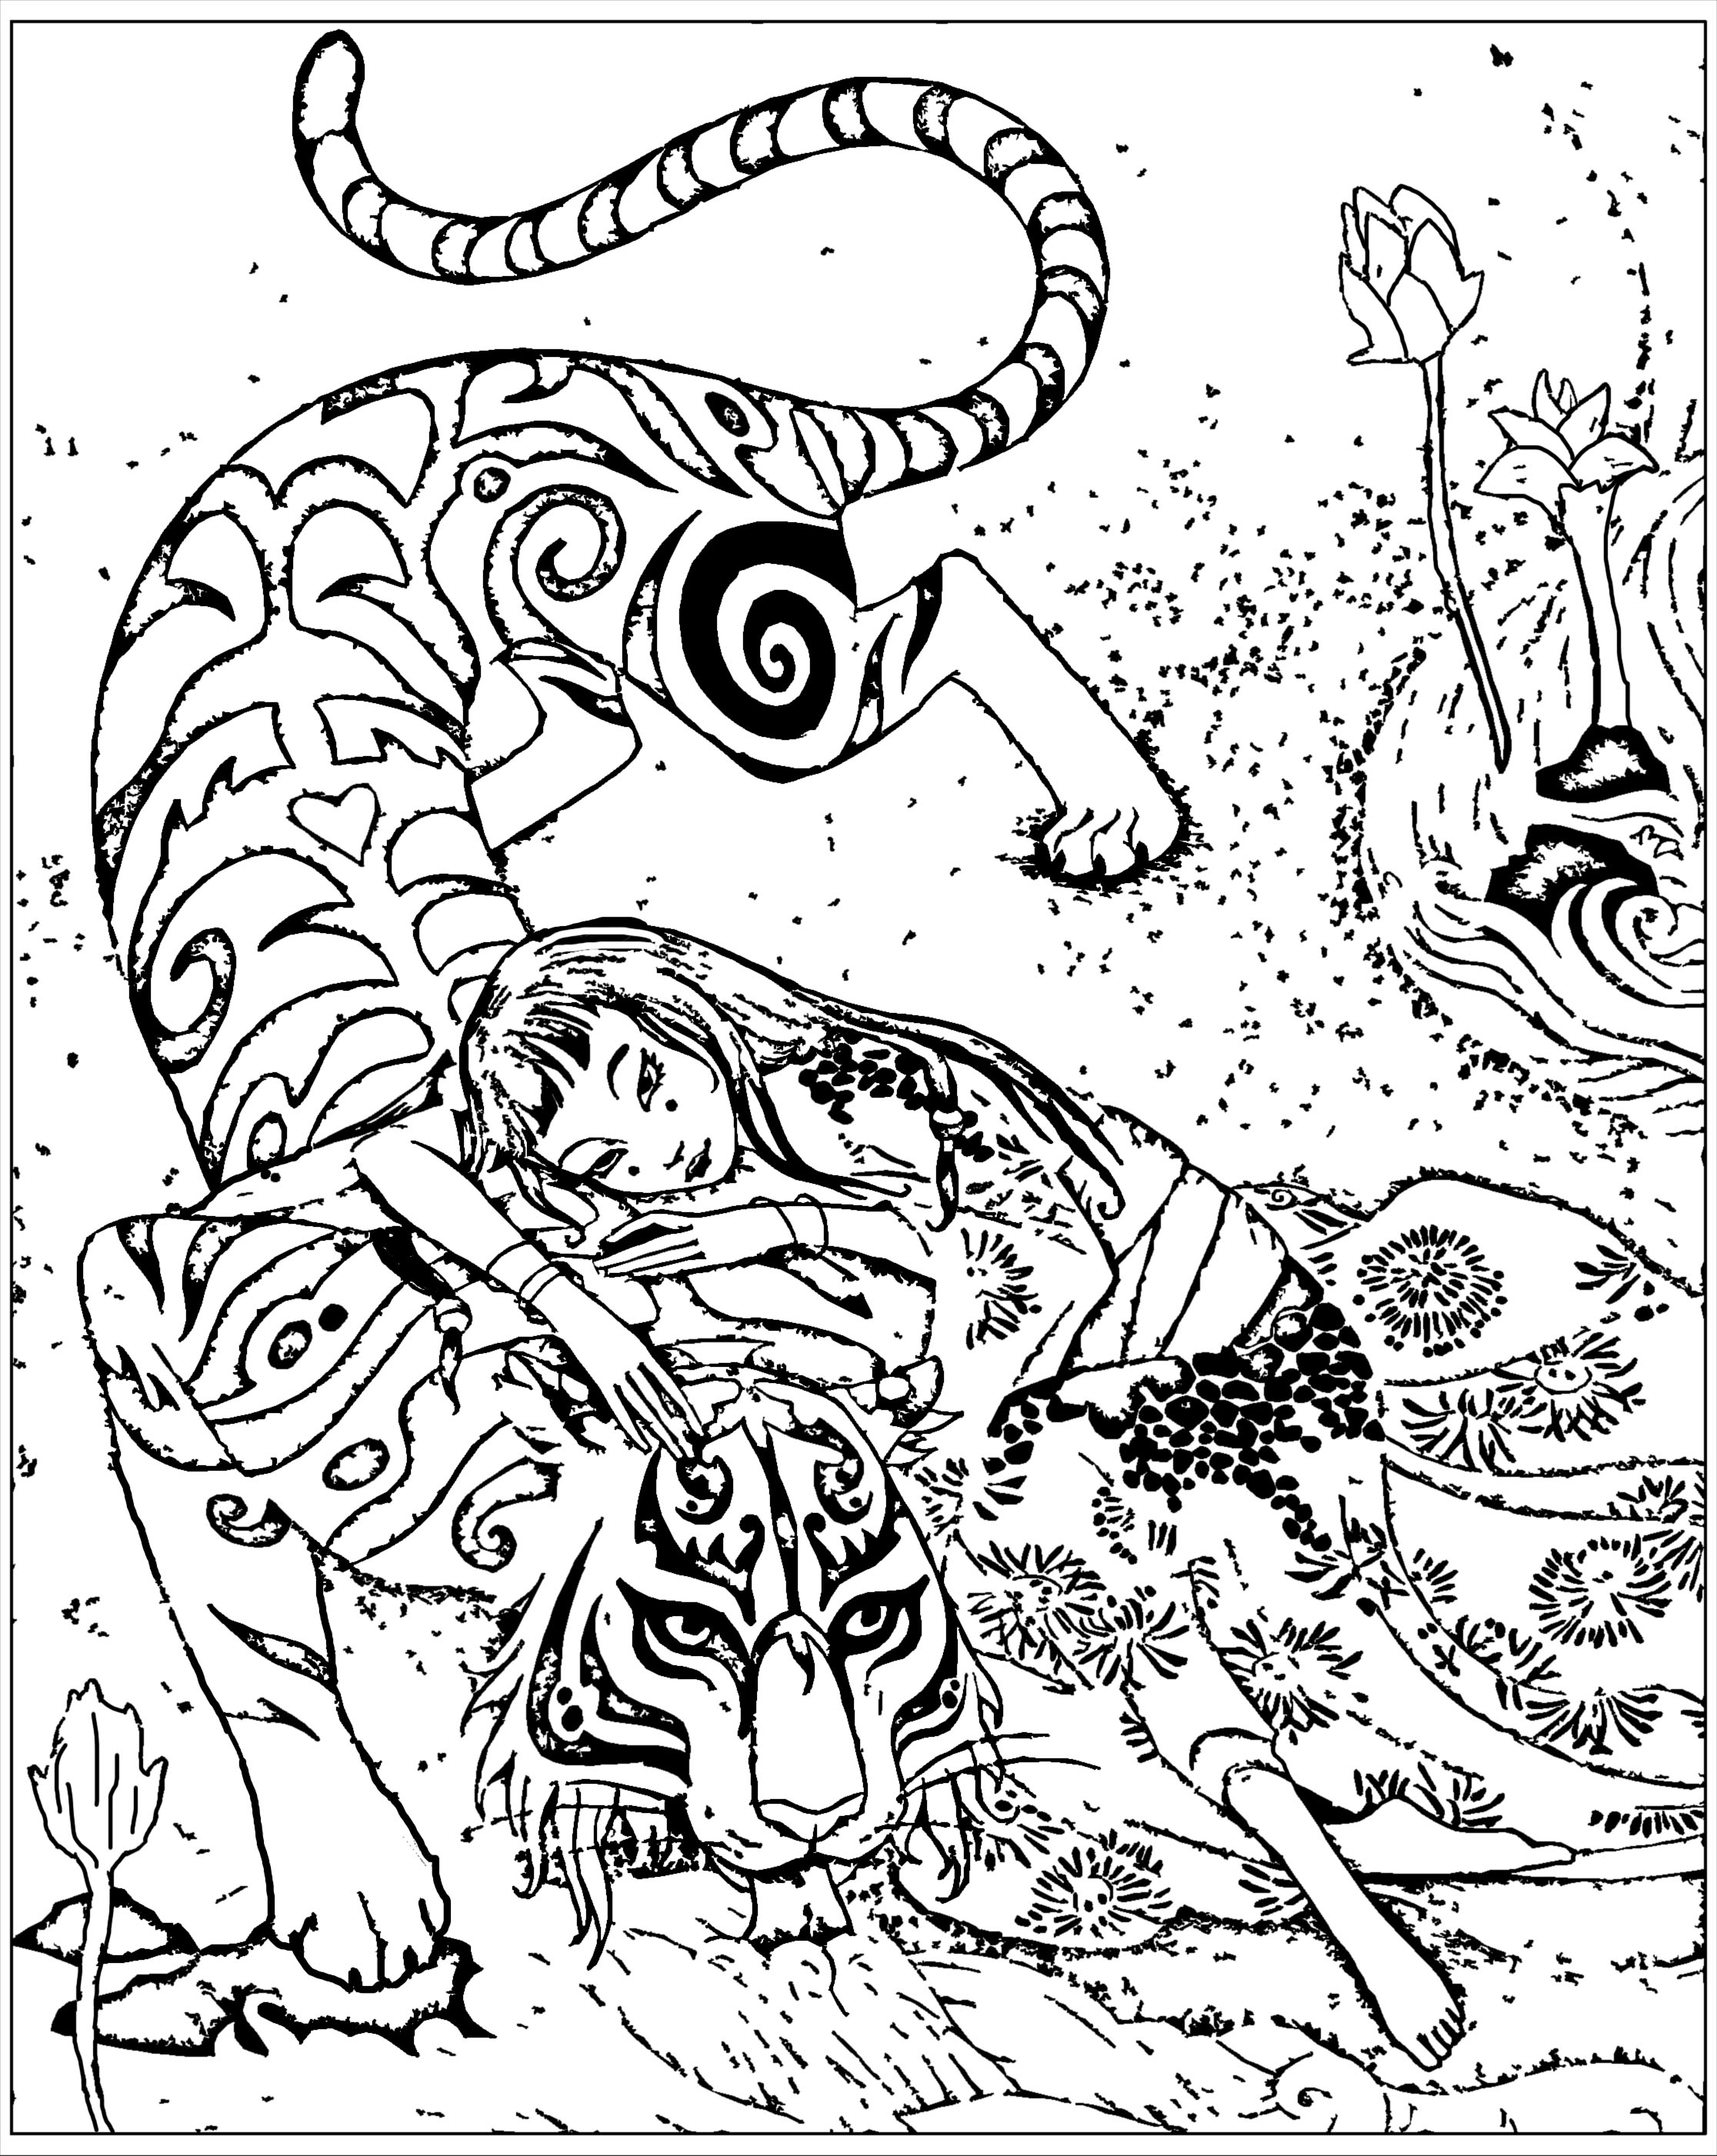 Jogo de colorir inspirado no livro Le tigre dévoué, de Qi feng